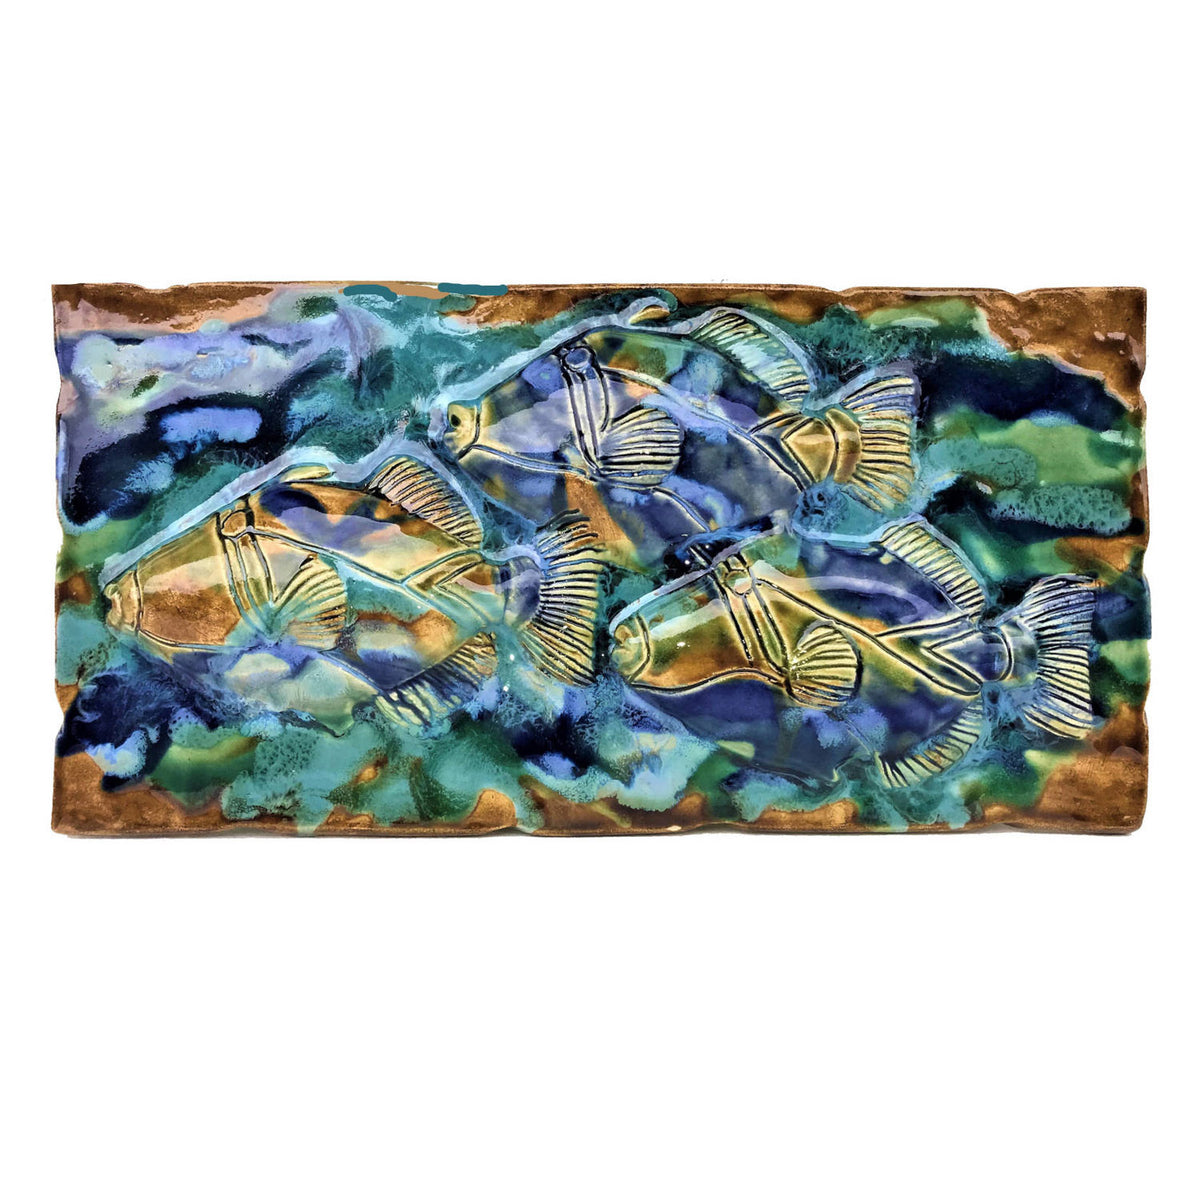 Humuhumunukunukuapuaʻa or Hawaiian Triggerfish, Ceramic Hawaiian Fish Wall Art, ceramic tiles